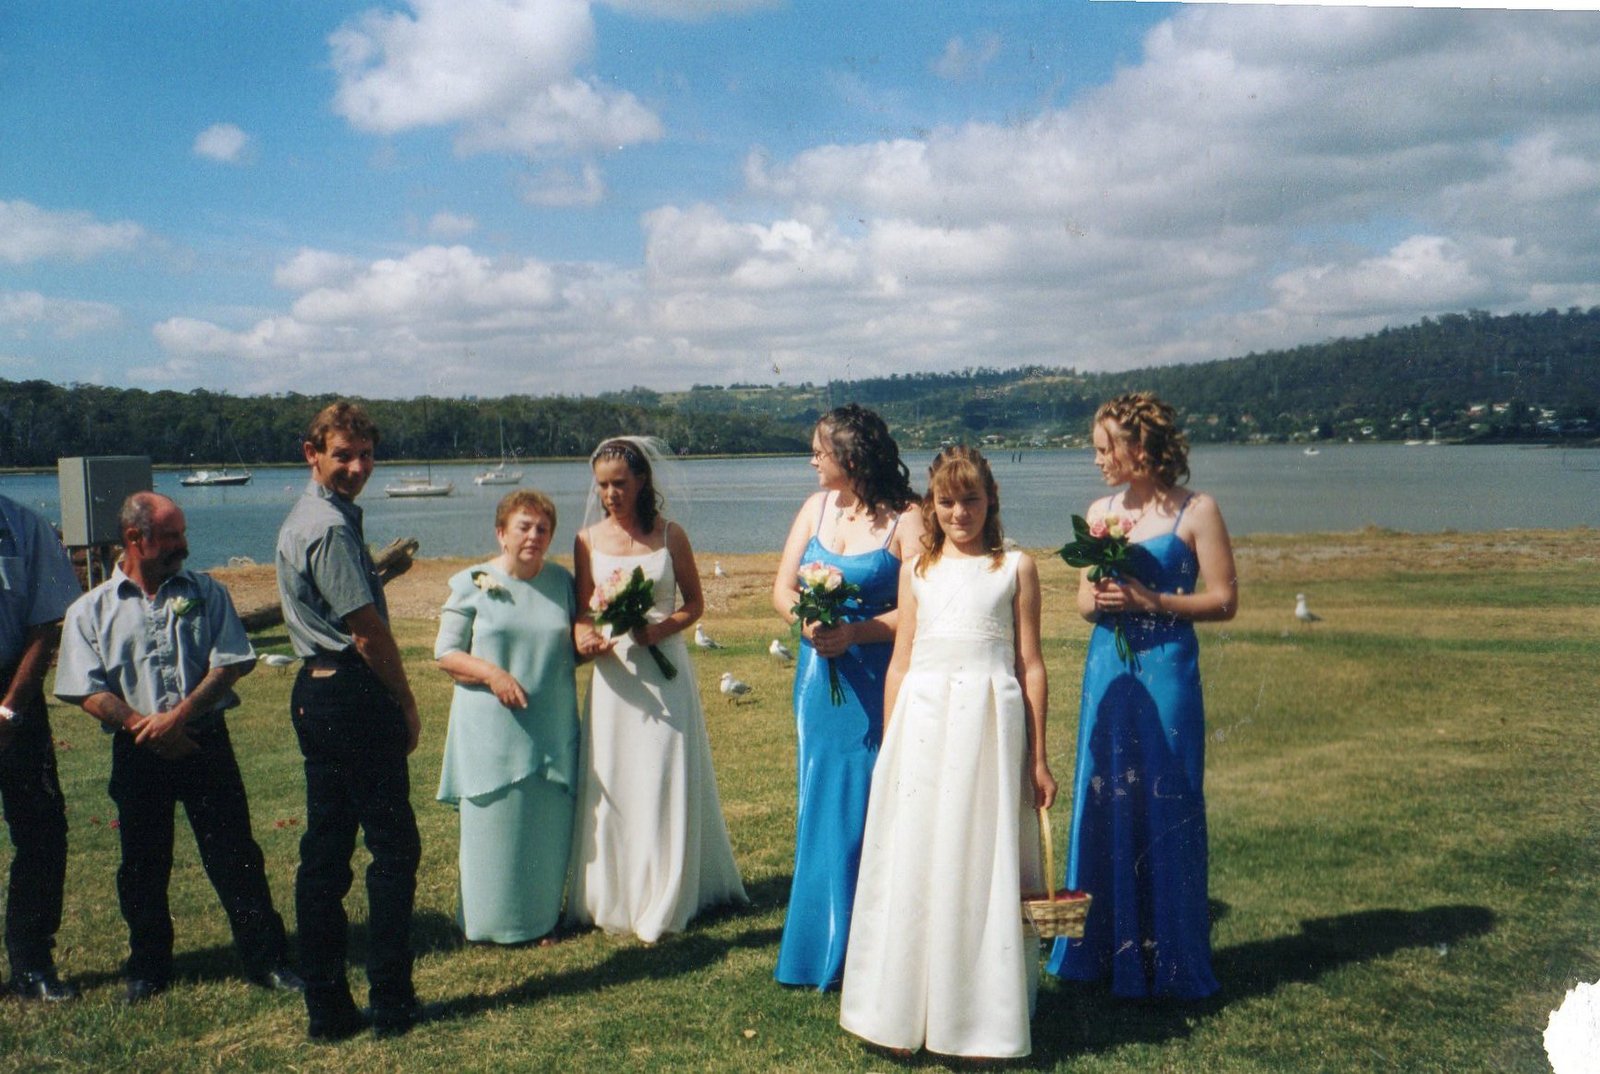 06 Stanlin & Trish Laughlin. Paul & Hannah Laughlin at their wed